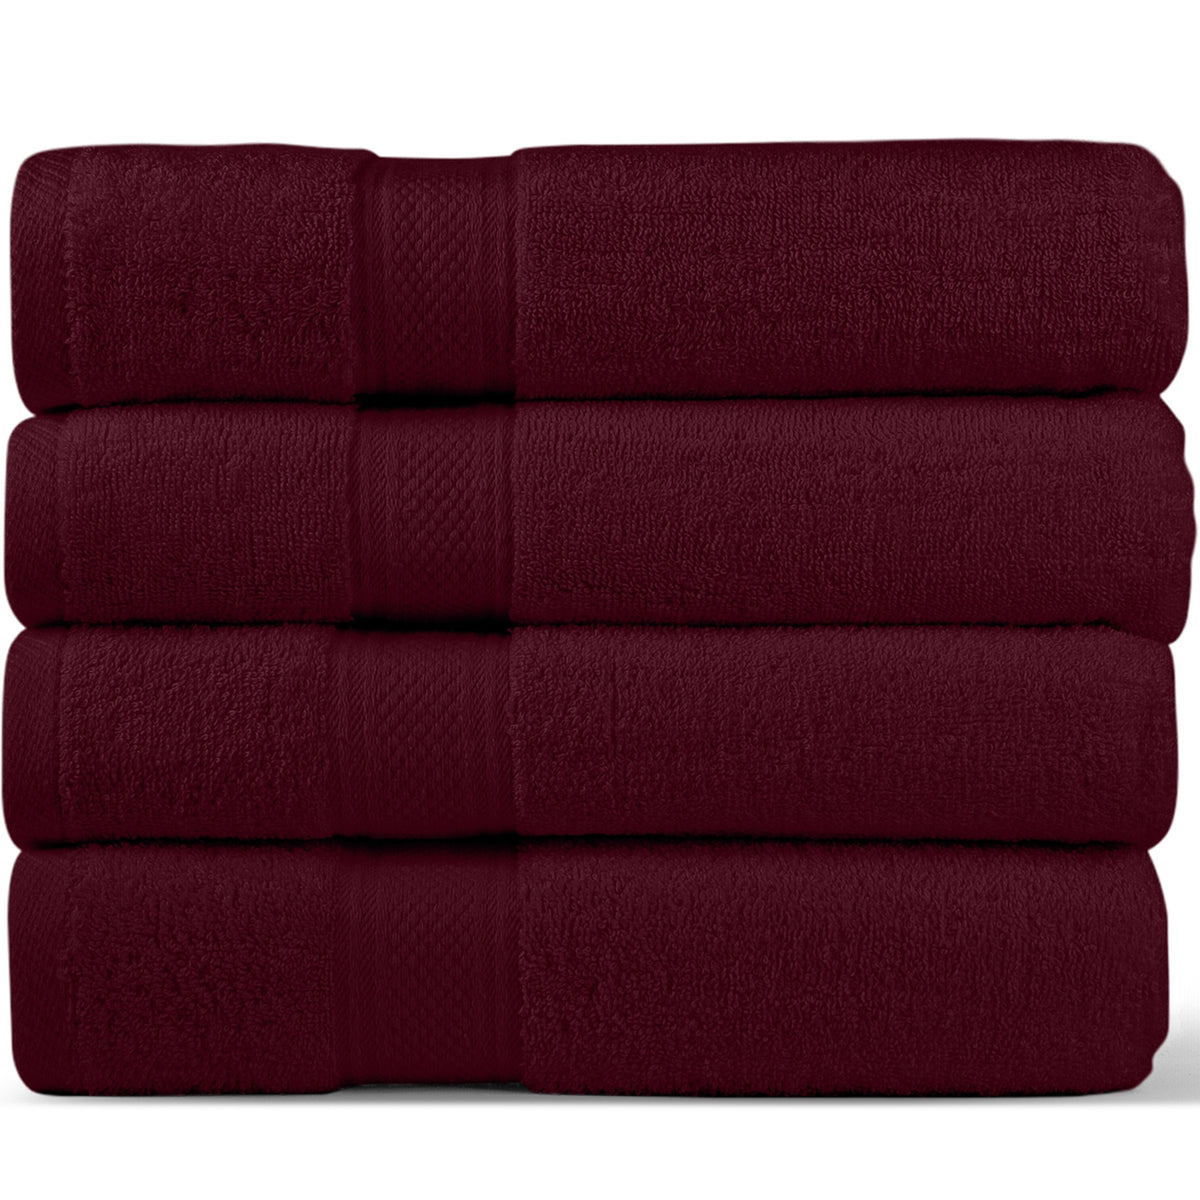 Burgundy Bath Towels Set (Pack of 4)